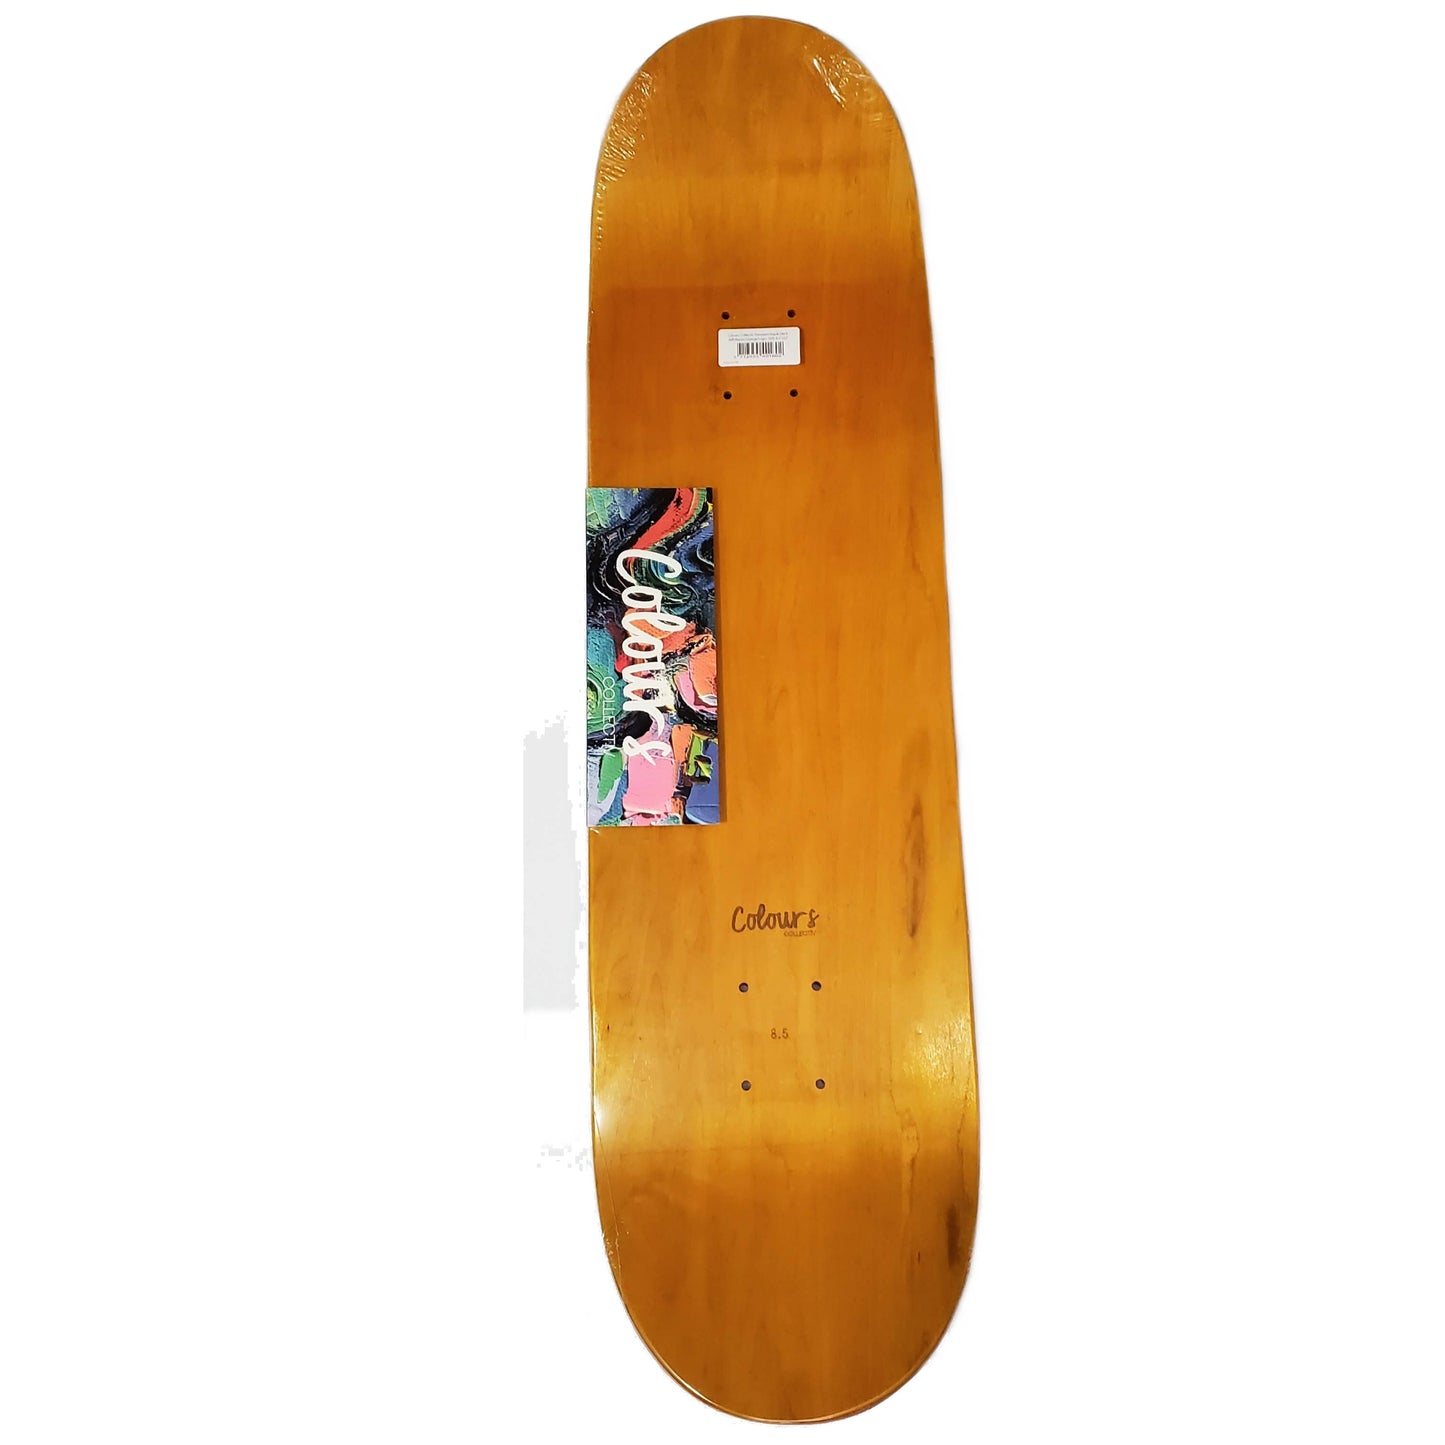 Colours Collectiv - "Grunge Logo" - Skateboard Deck - 8.5"